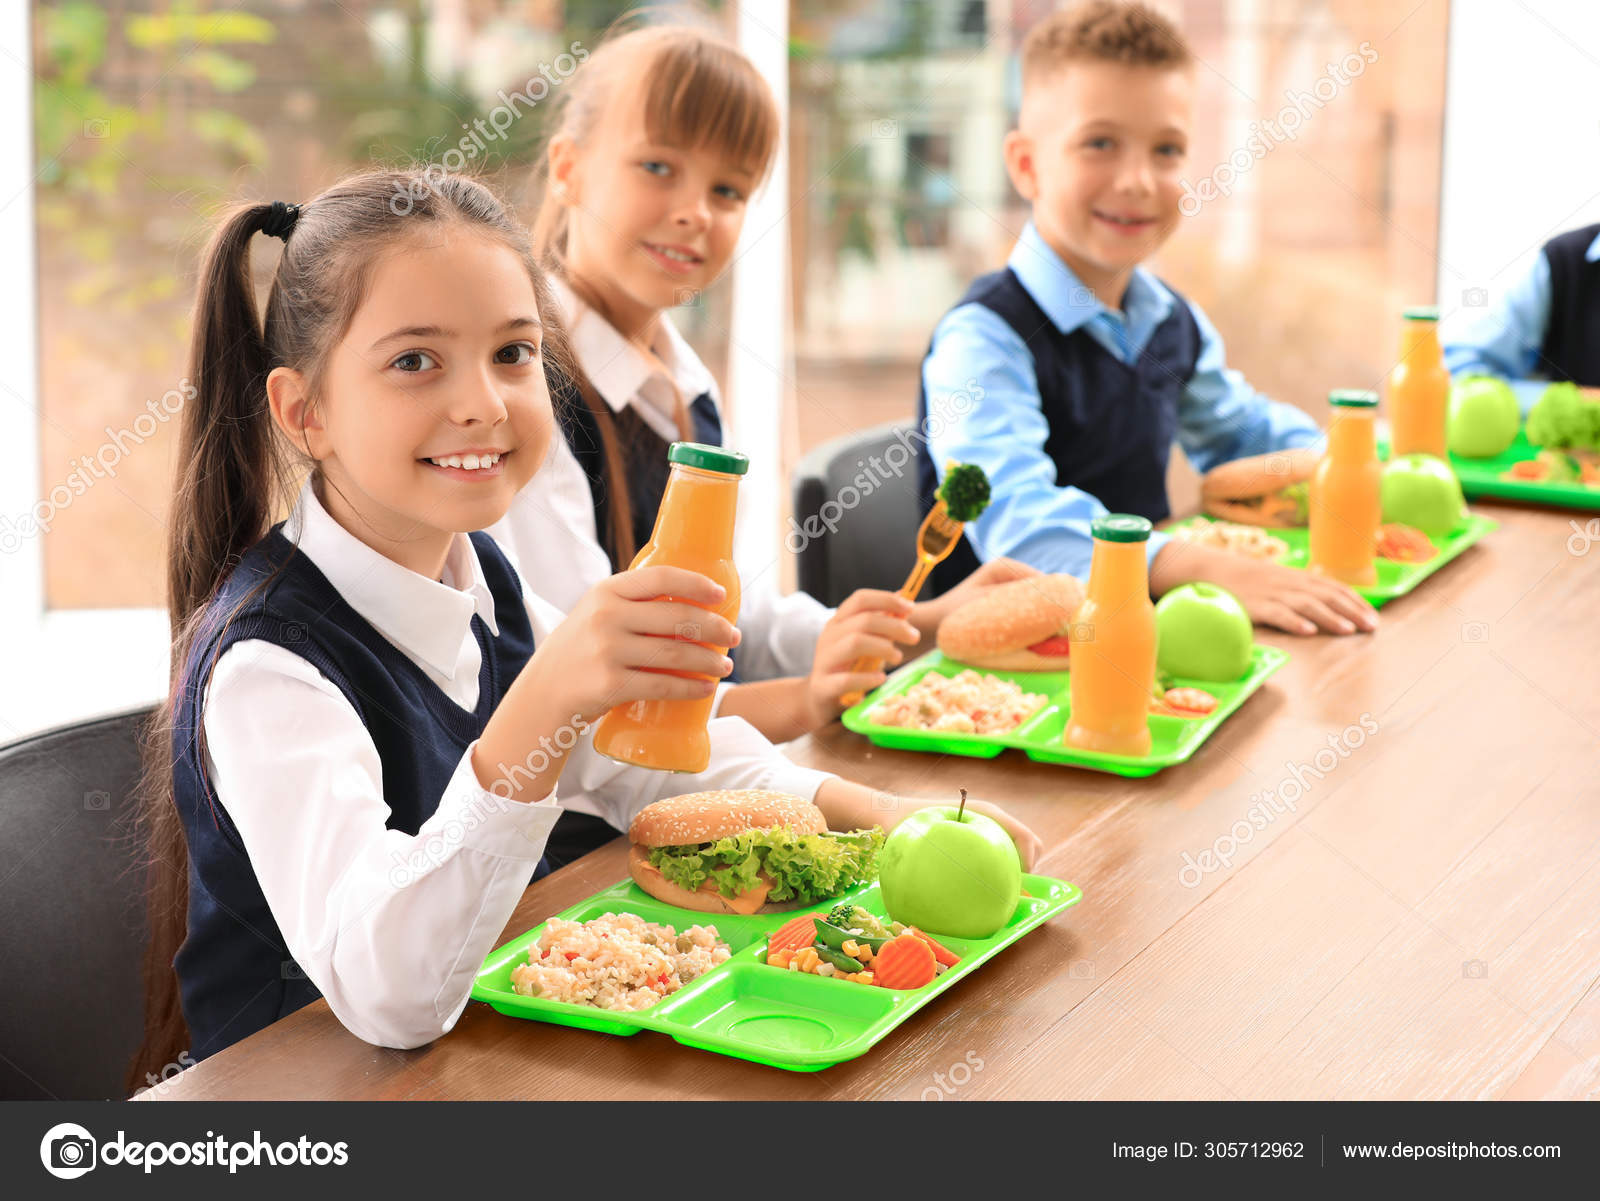 https://st4.depositphotos.com/16122460/30571/i/1600/depositphotos_305712962-stock-photo-happy-children-at-table-with.jpg